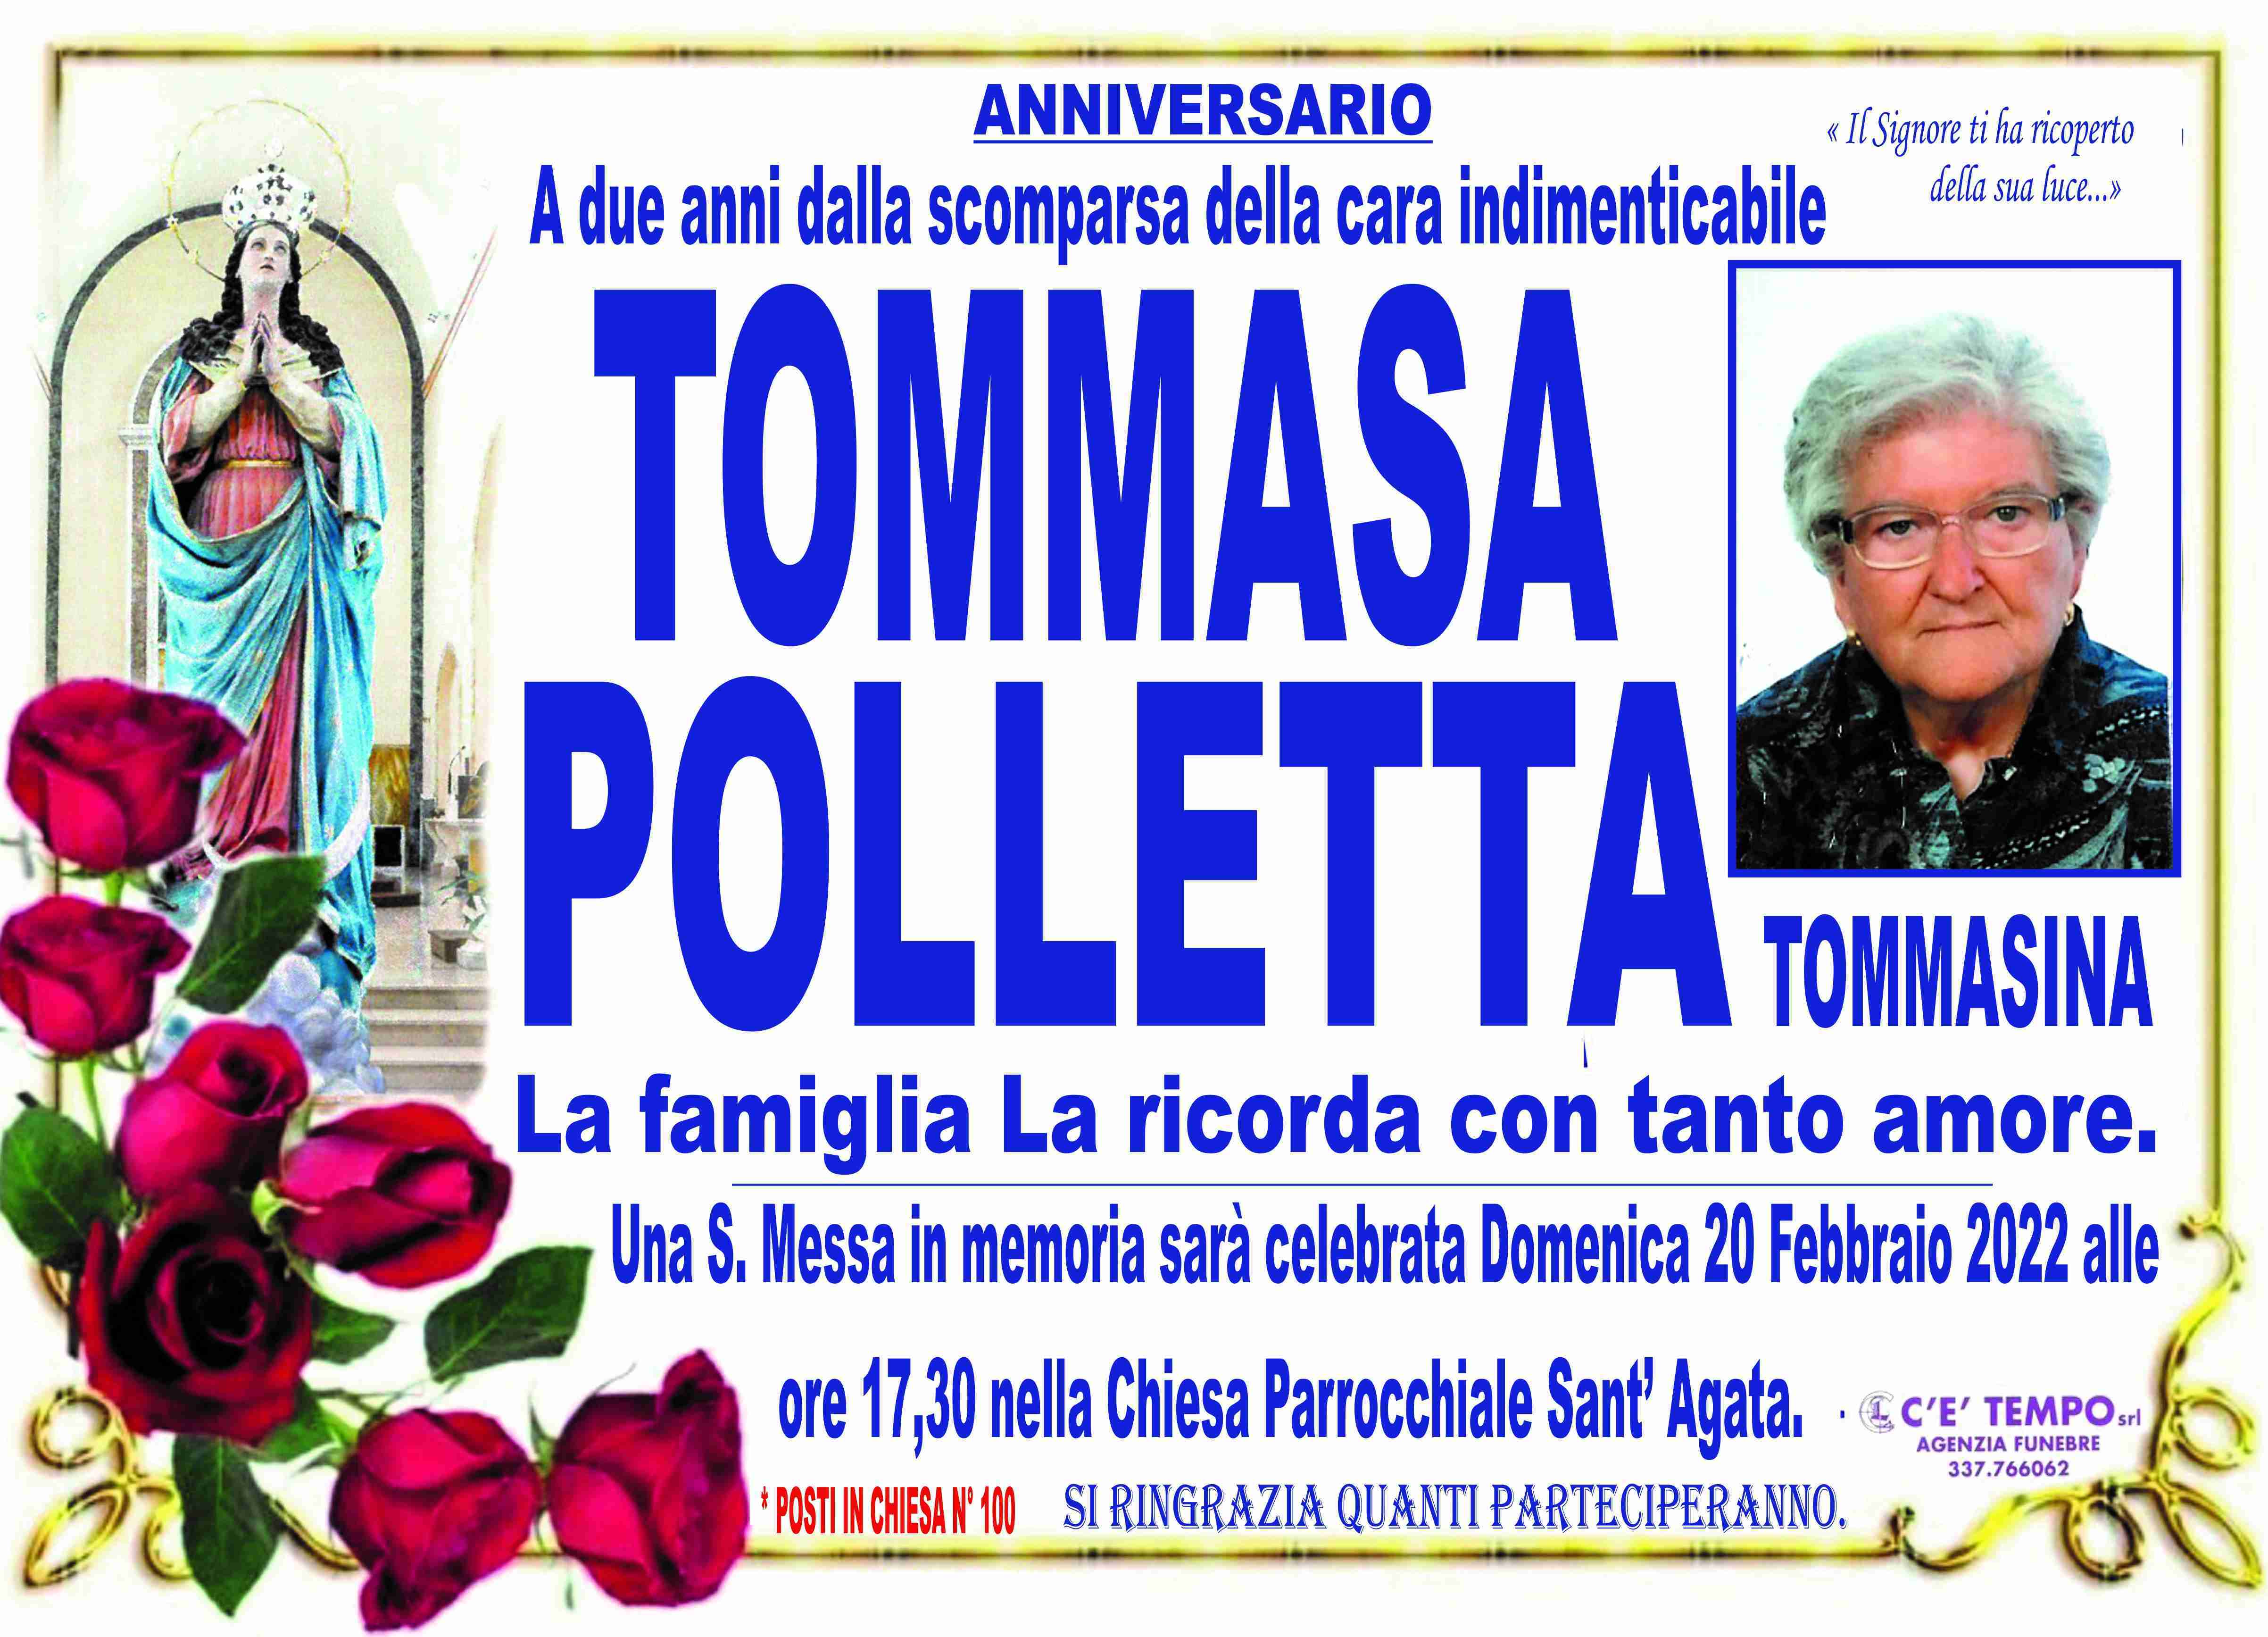 Tommasa Polletta